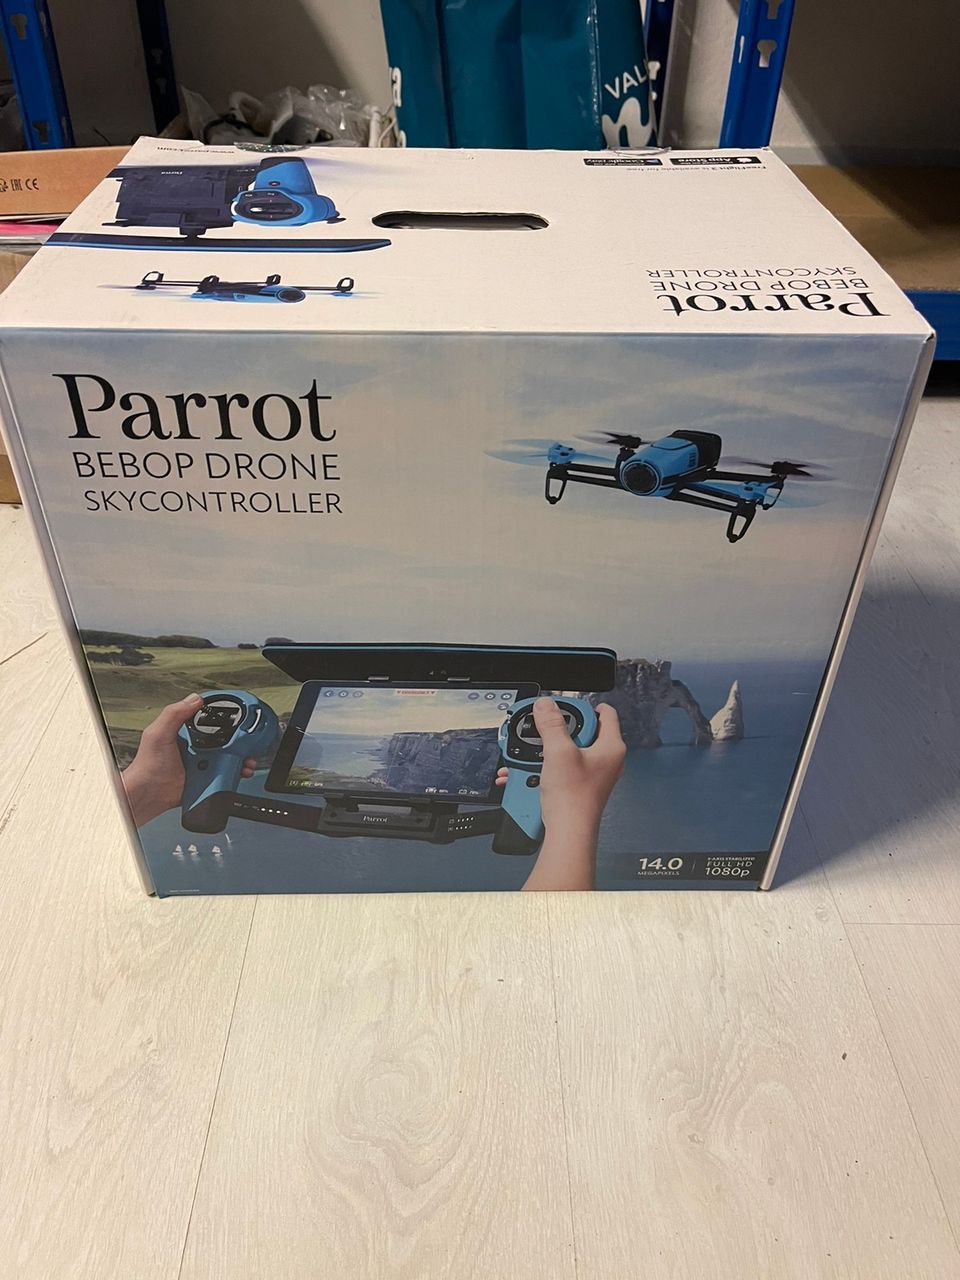 Parrot bebop drone skycontroller